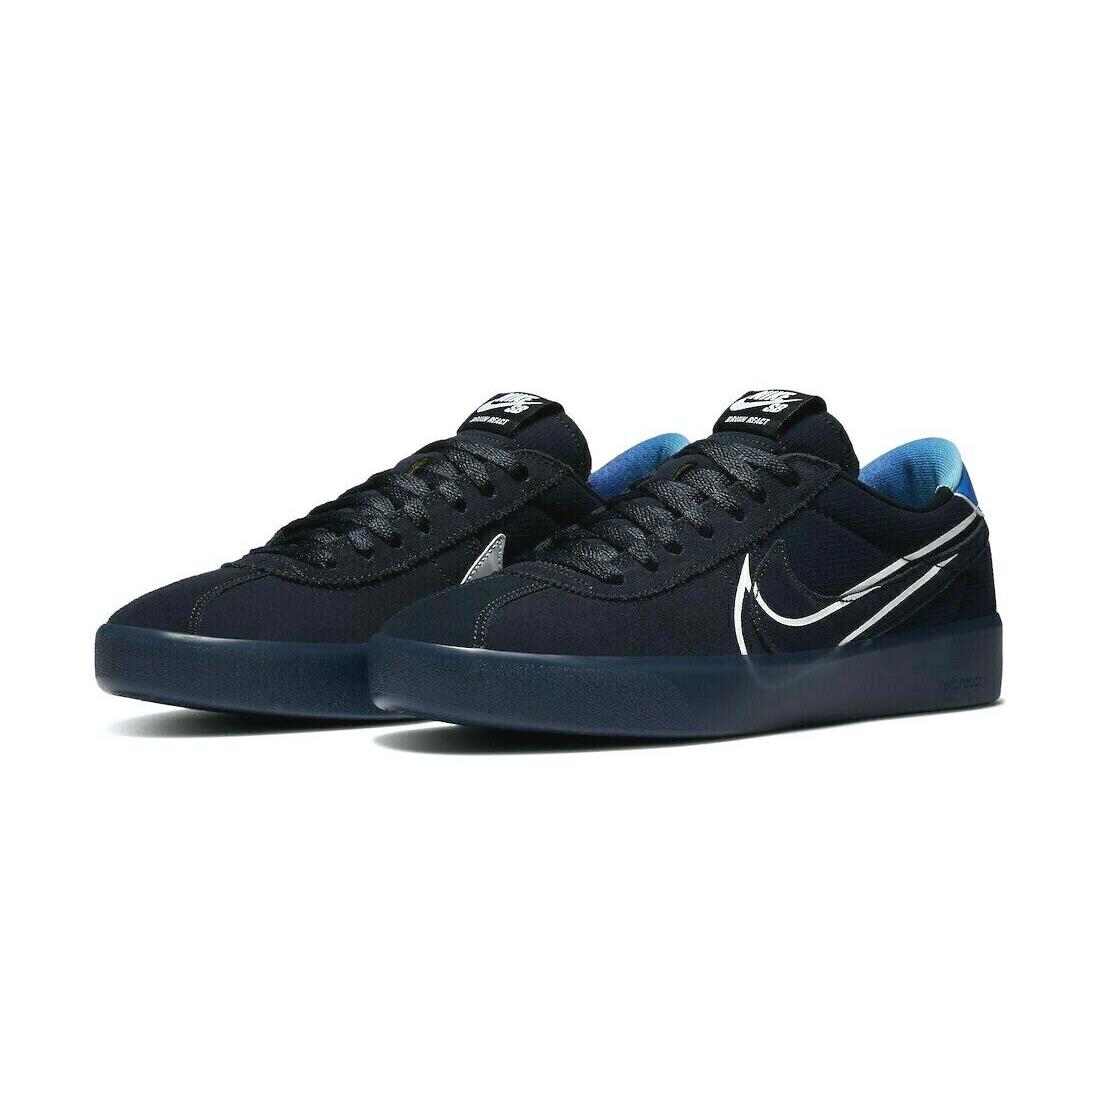 Nike SB Bruin React T Mens Size 11.5 Sneakers Shoes CV5980 400 Dark Obsidian - Multicolor